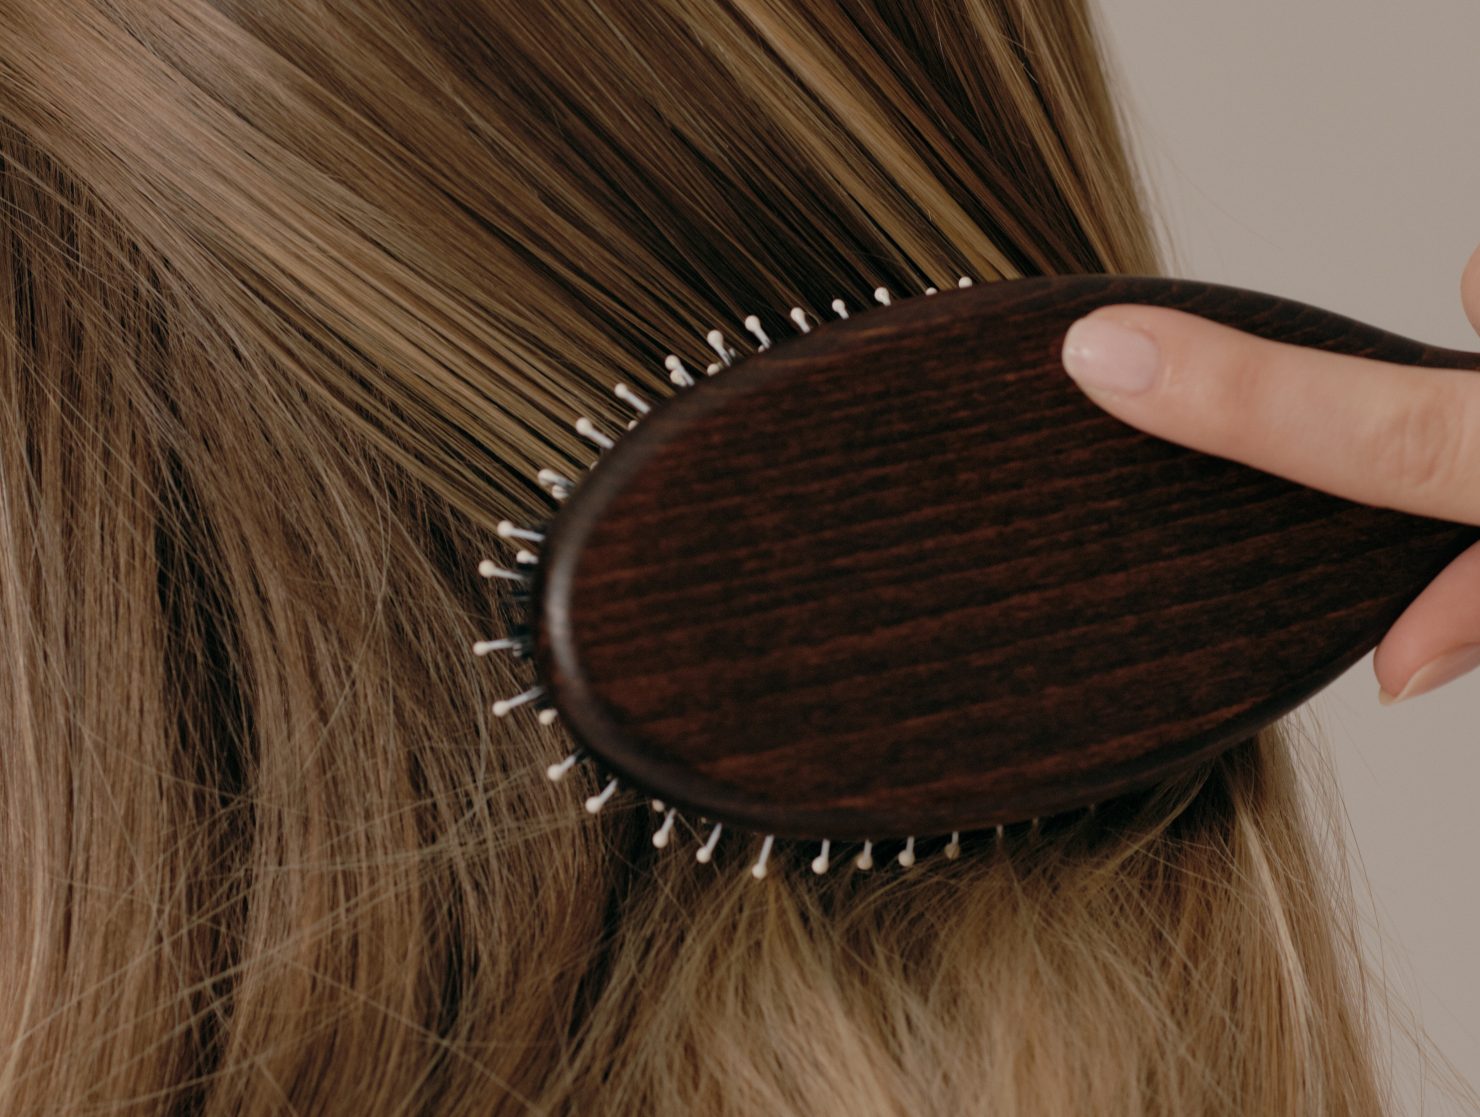 A model using a Prose Monogrammed Hair Brush on her hair